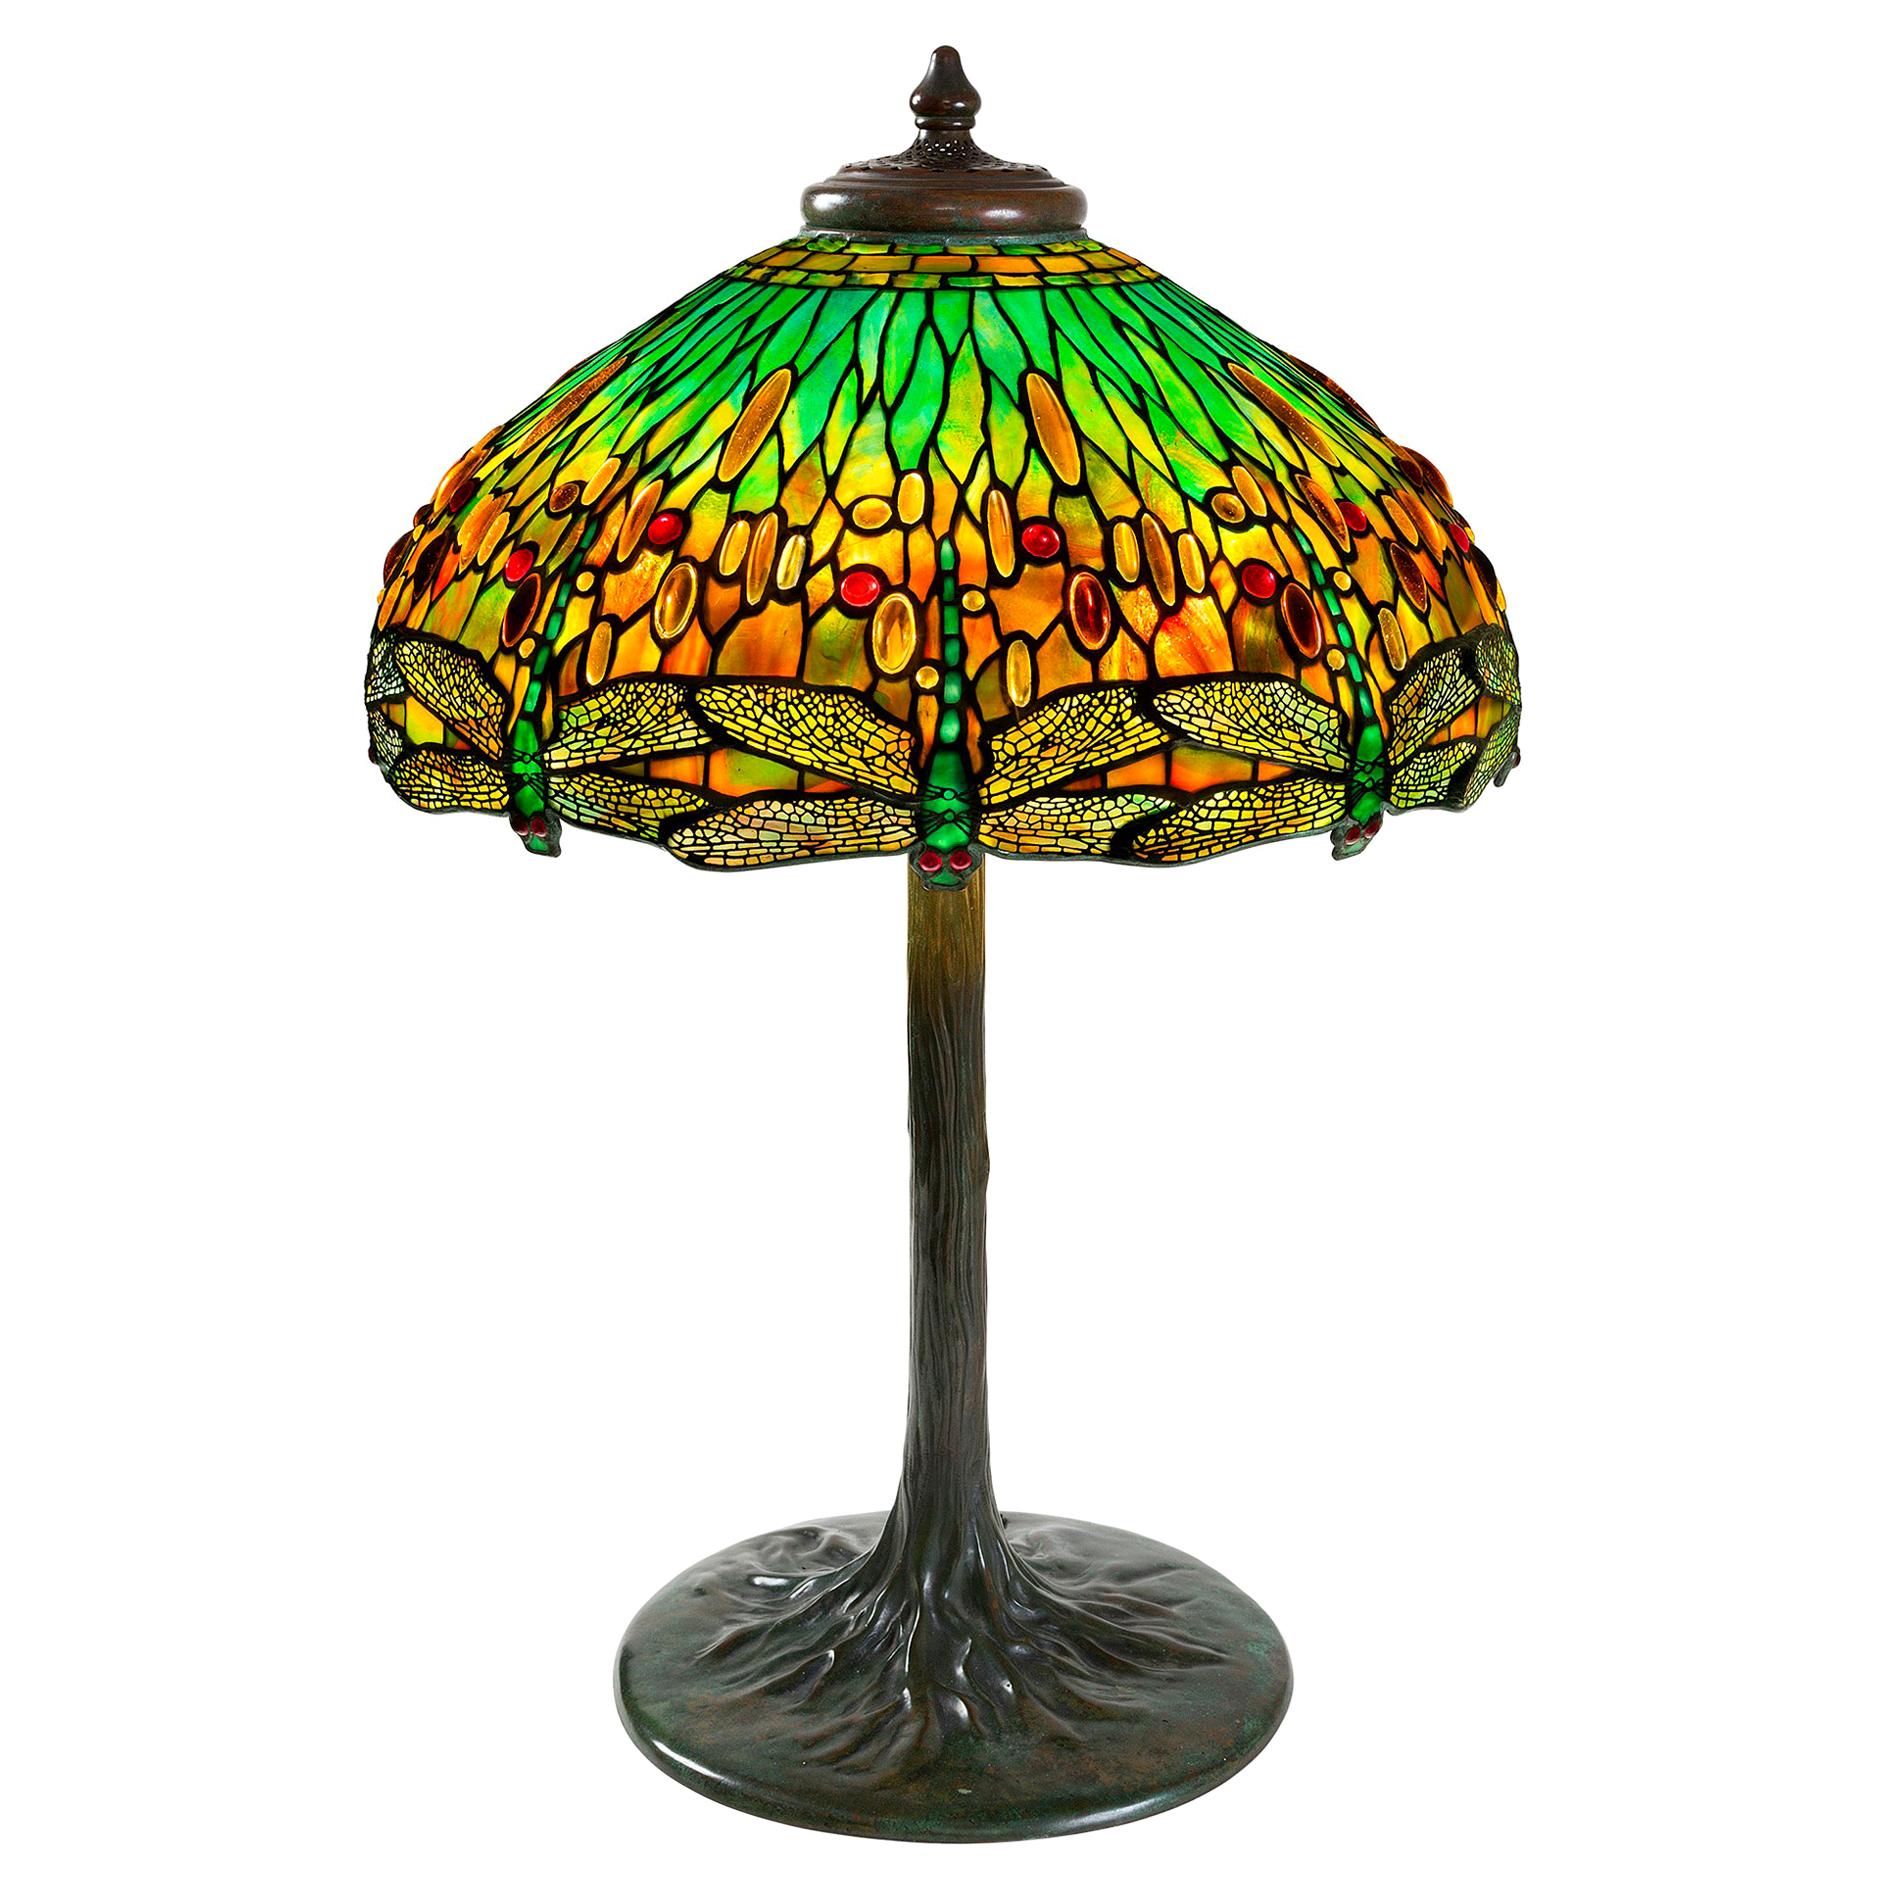 Tiffany Studios New York "Drophead Dragonfly" Table Lamp